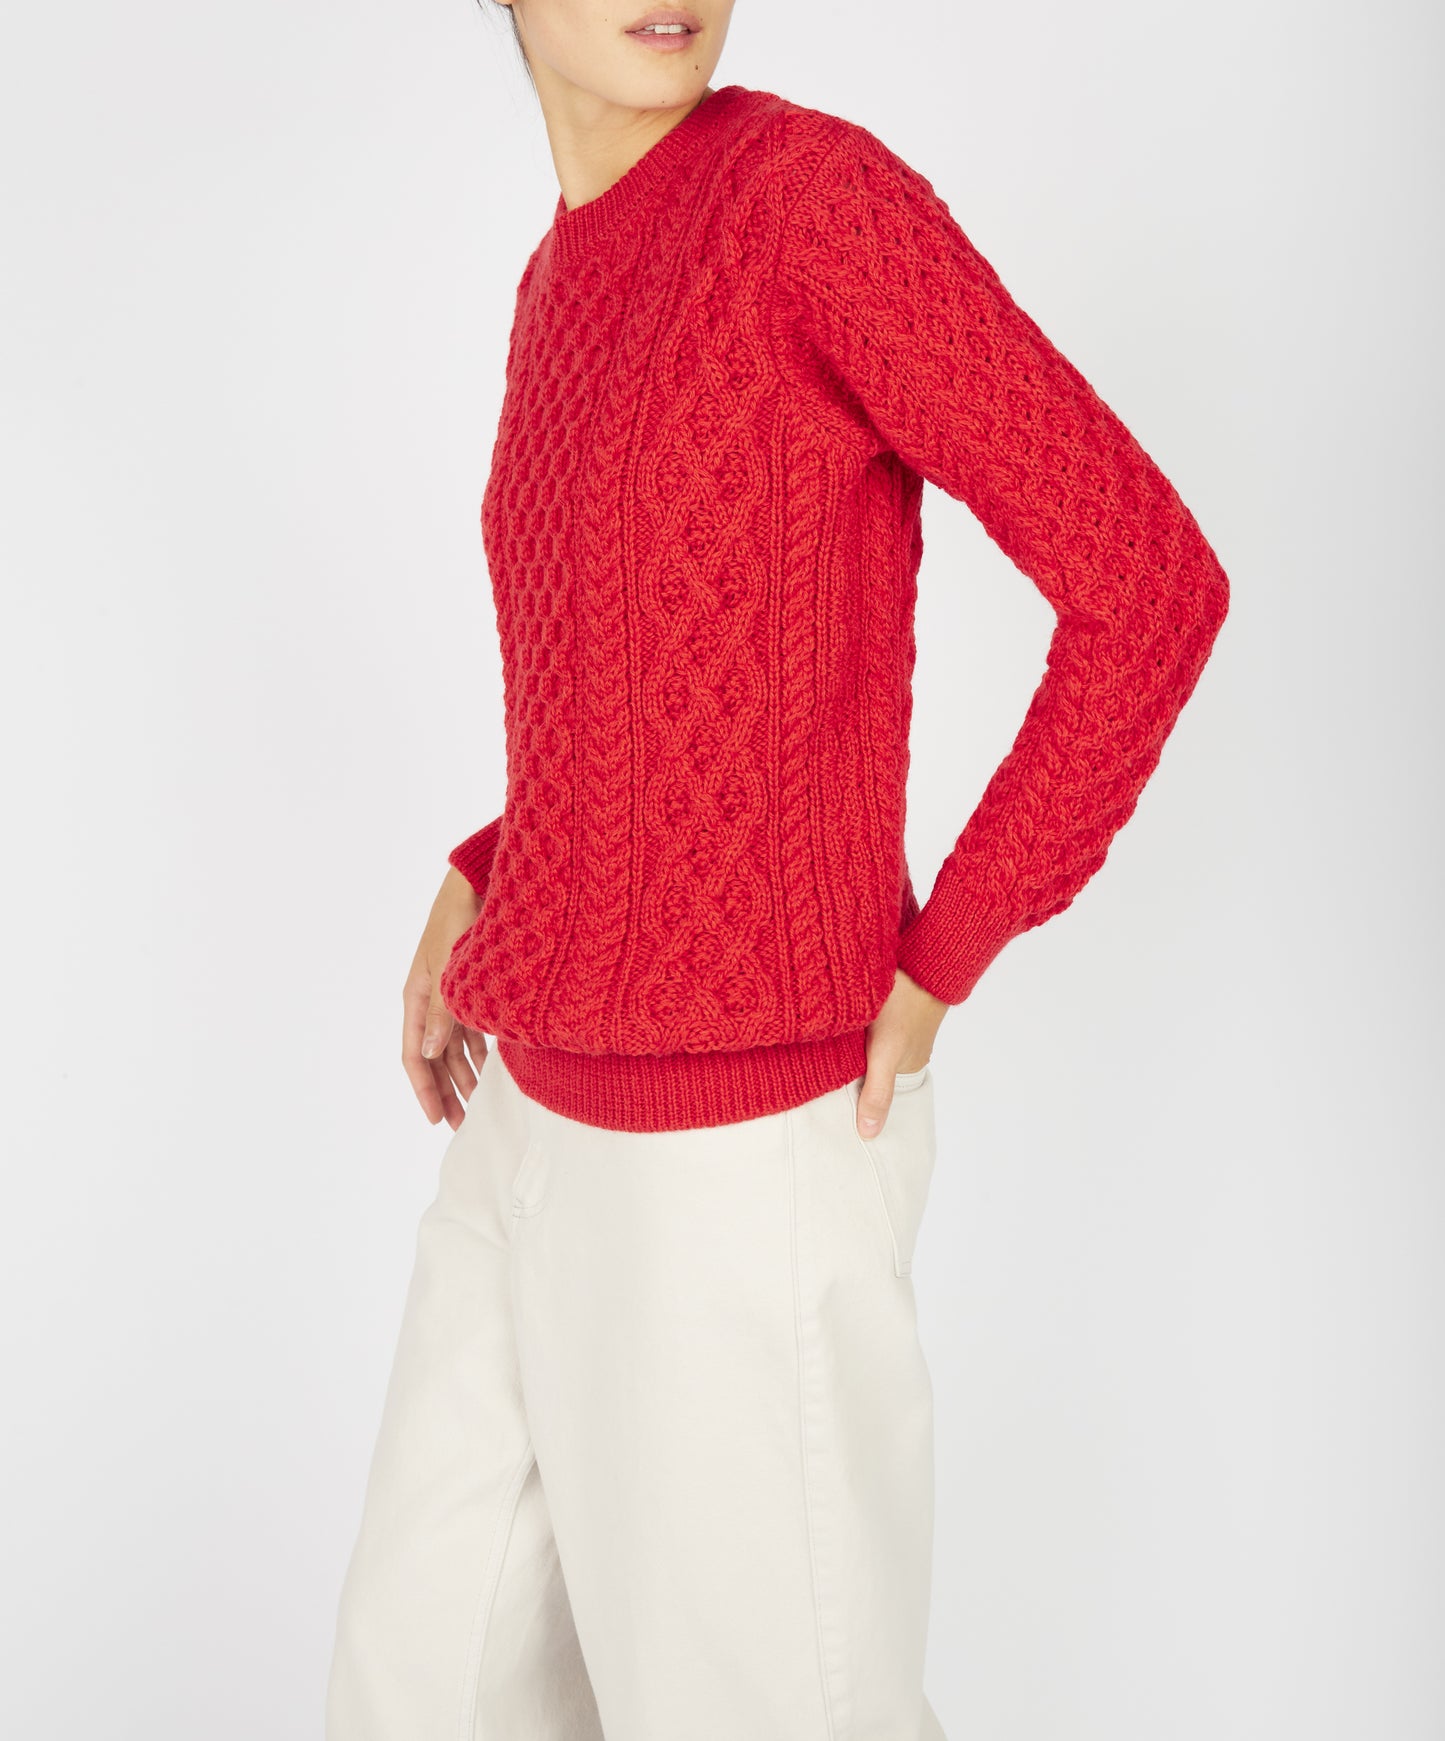 IrelandsEye Knitwear Blasket Honeycomb Stitch Womens Aran Sweater Scarlet